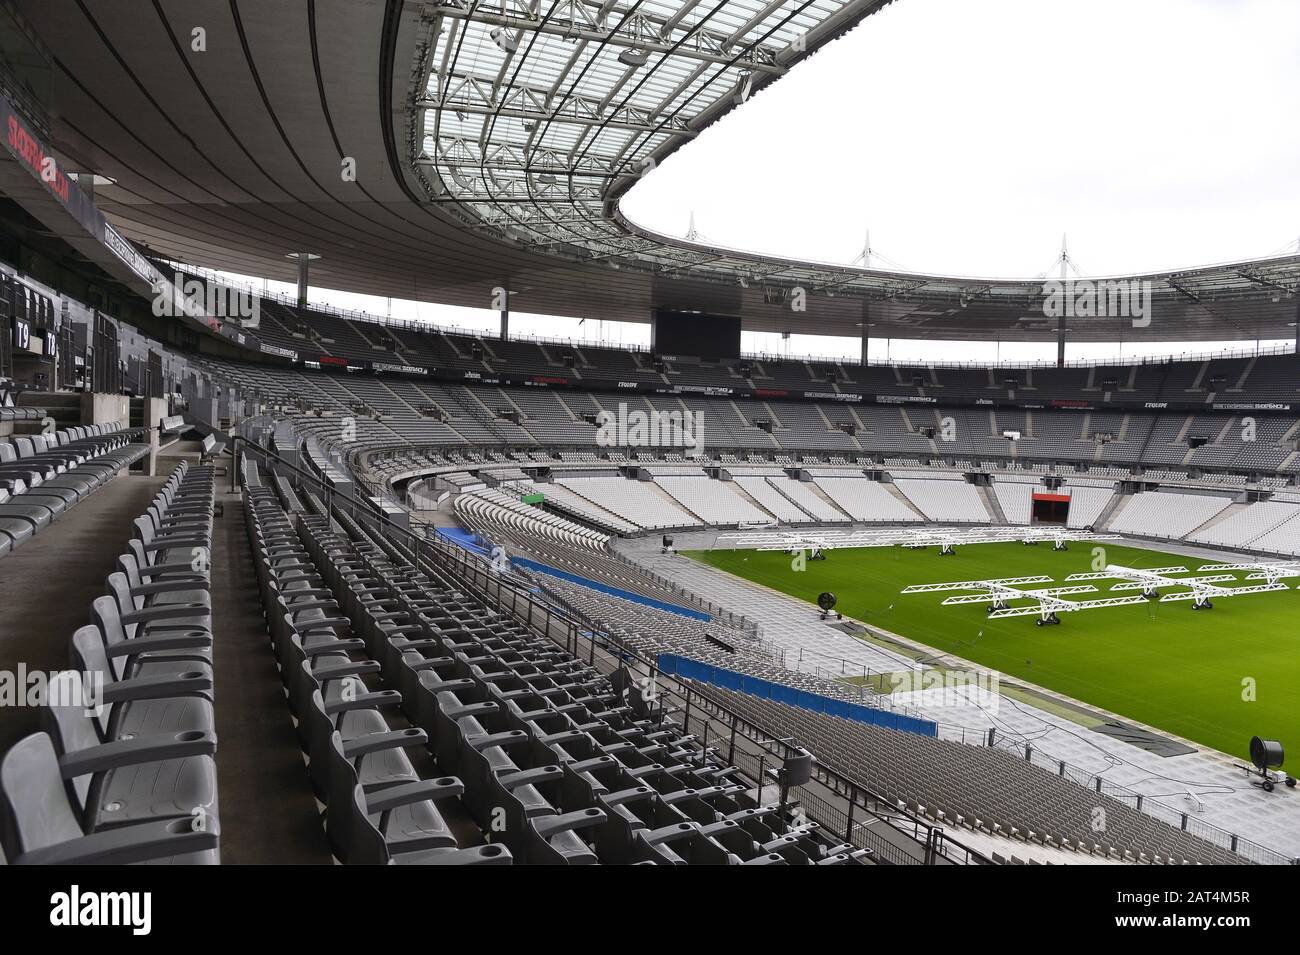 Stade De France - Saint-Denis - Francia Foto stock - Alamy